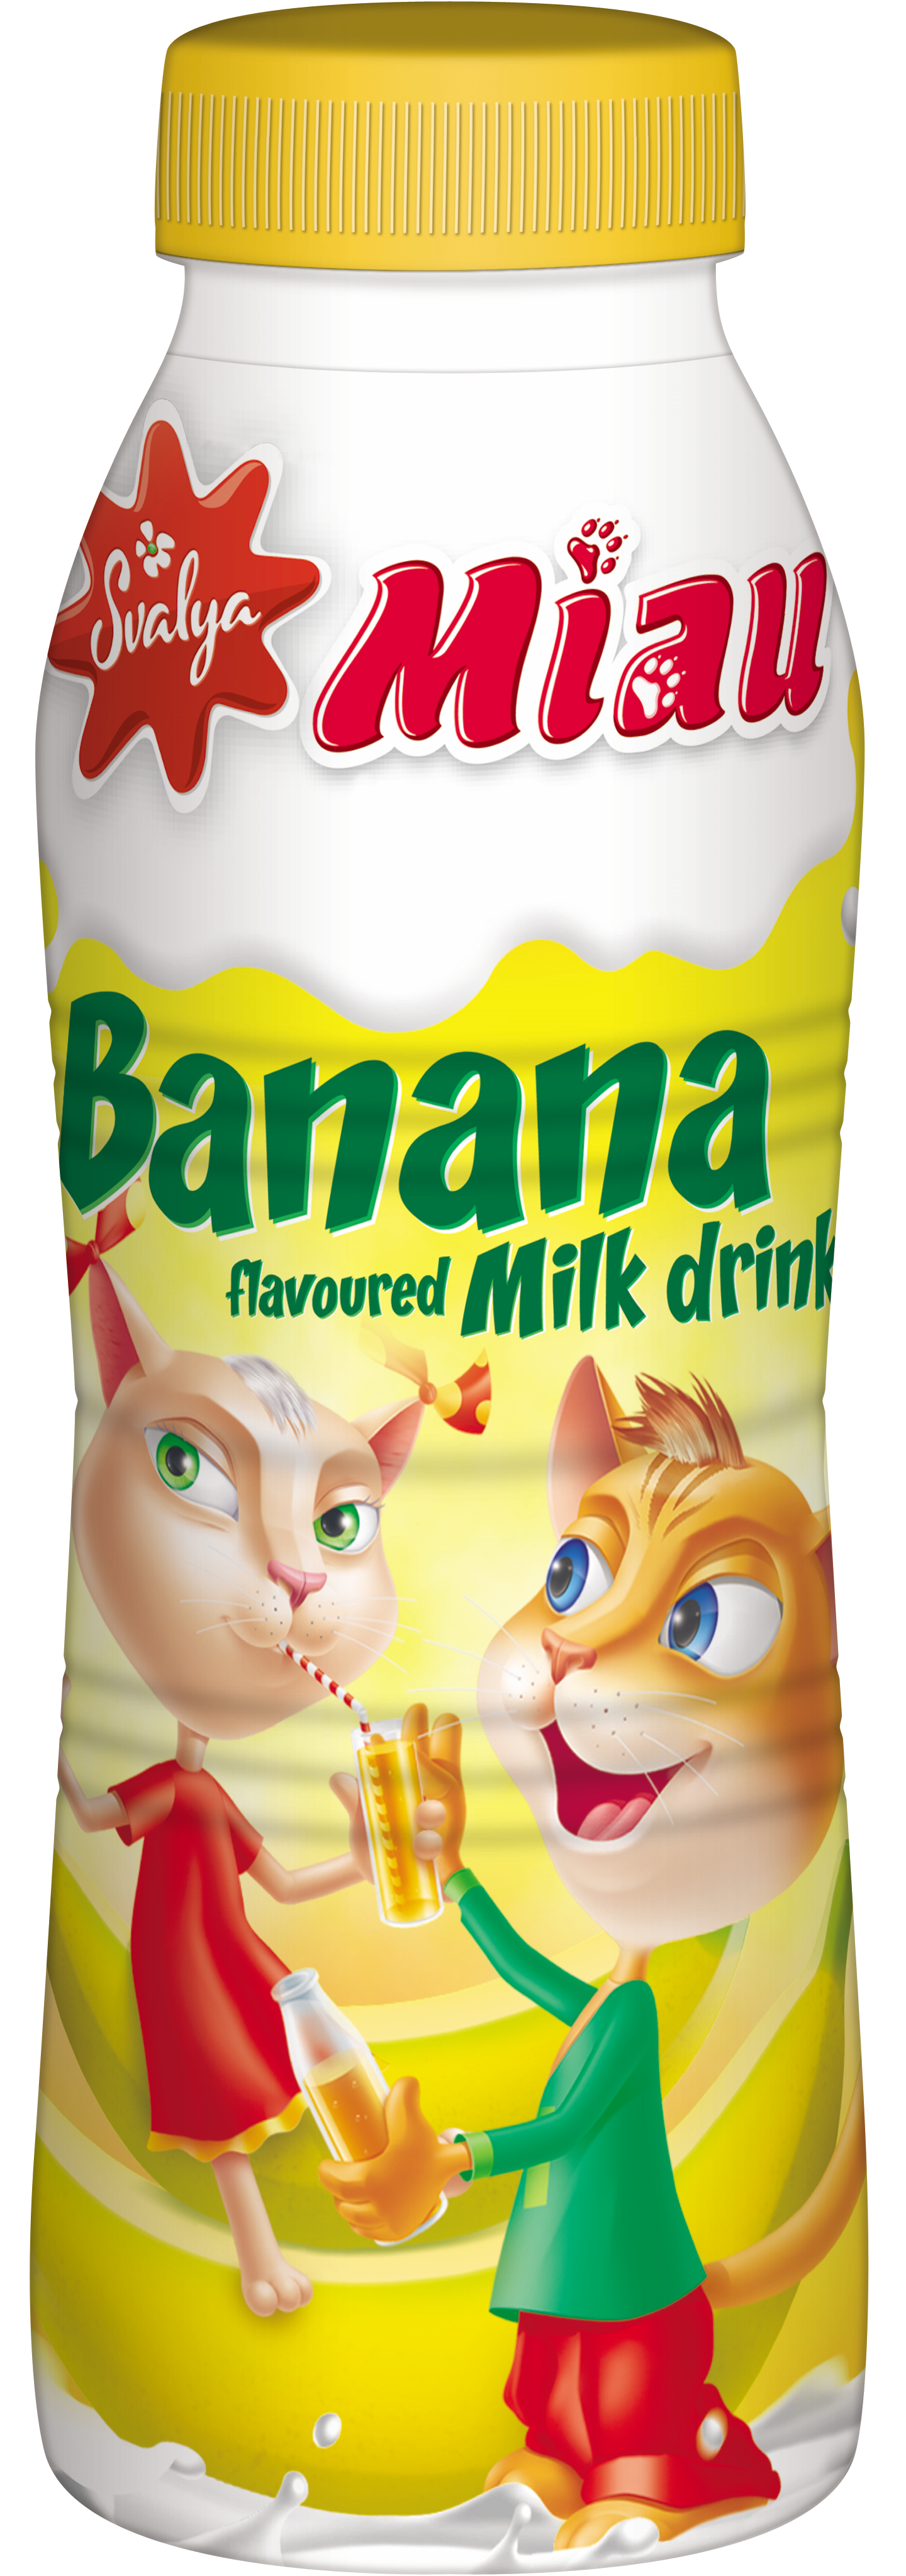 Flavored_milk_drinks